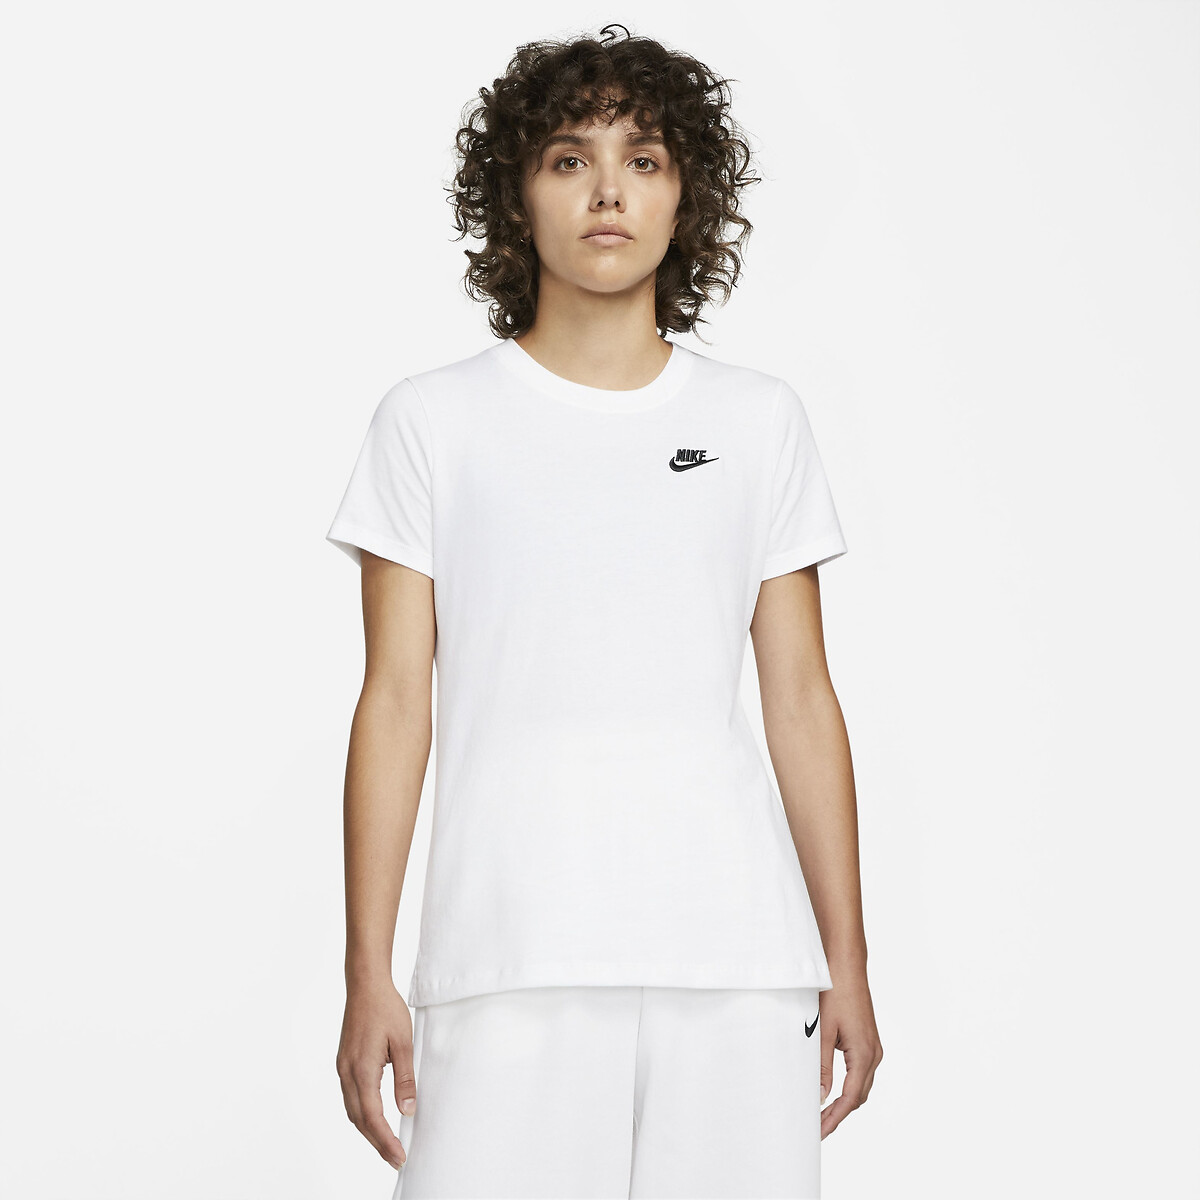 Sportswear club t-shirt in classic fit , white, Nike | La Redoute